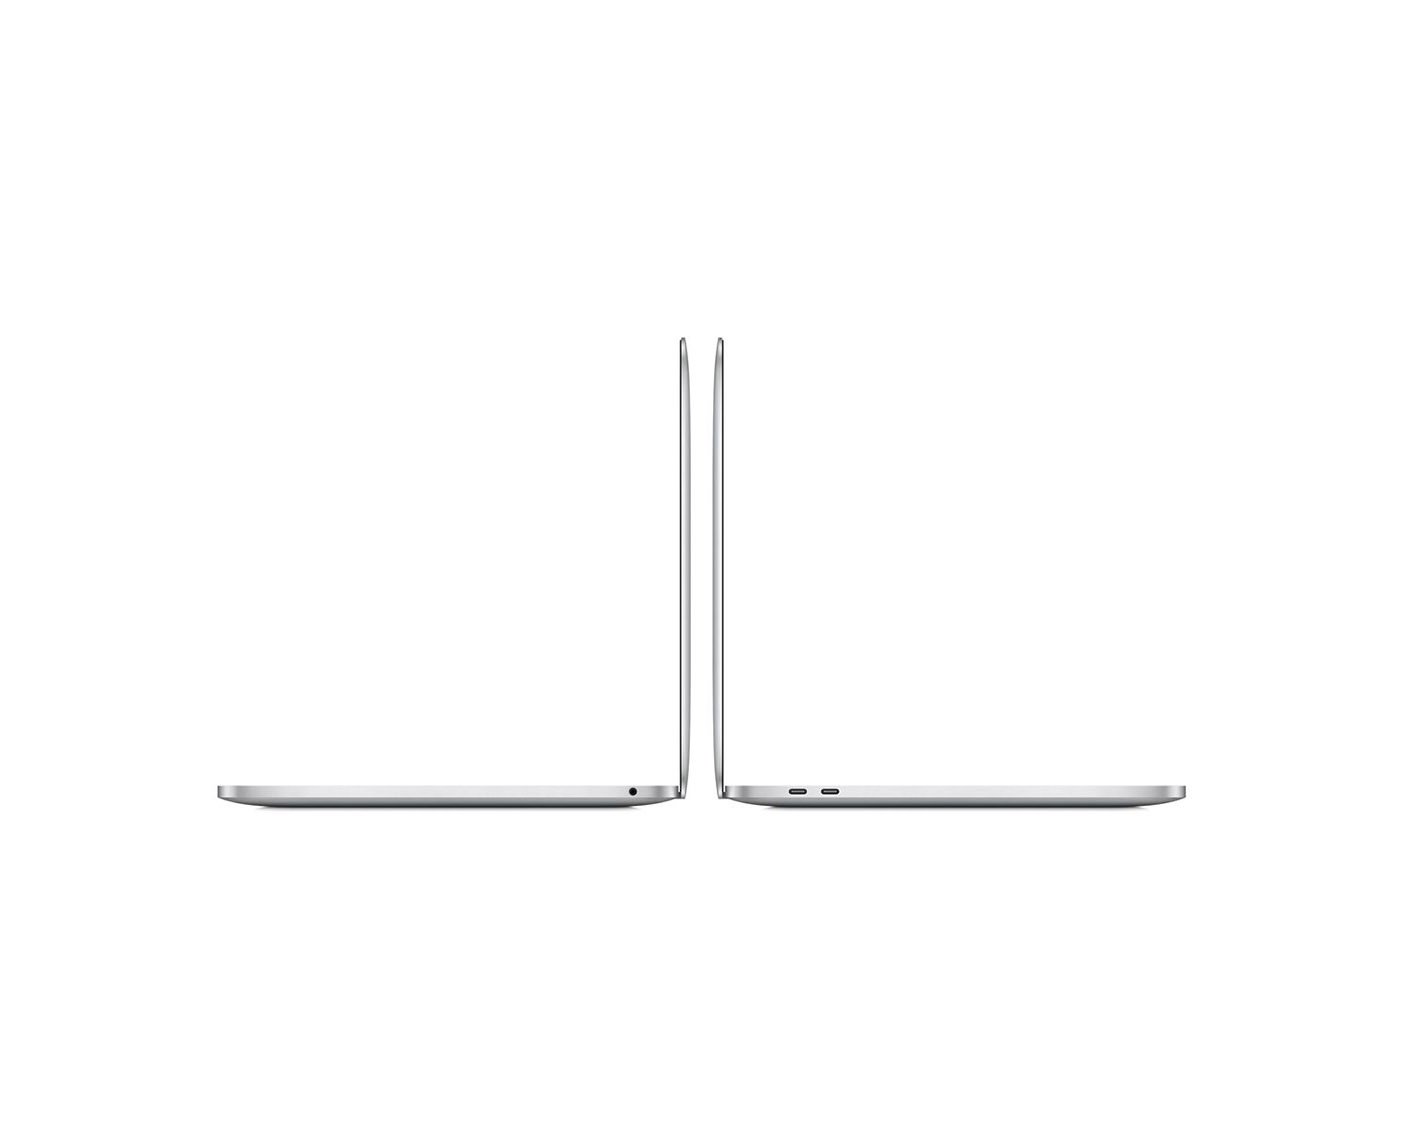 Macbook Pro 13-inch (Touchbar | 4 thunderbolt ports) - 2020 - i7 - Silver